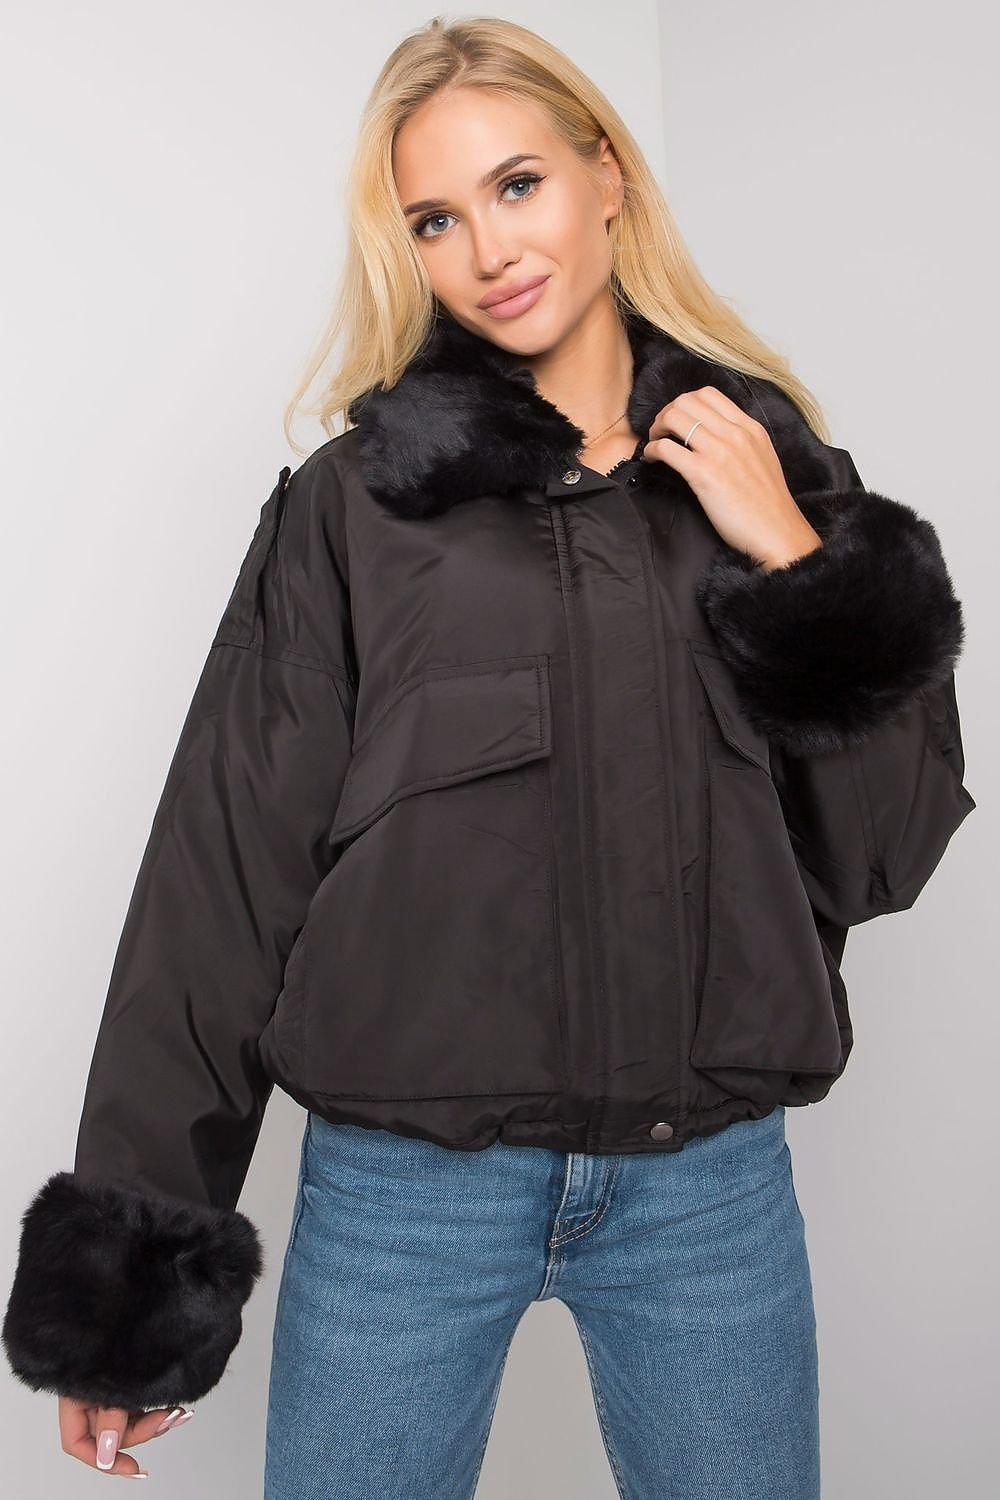 Black jacket with a fur trim